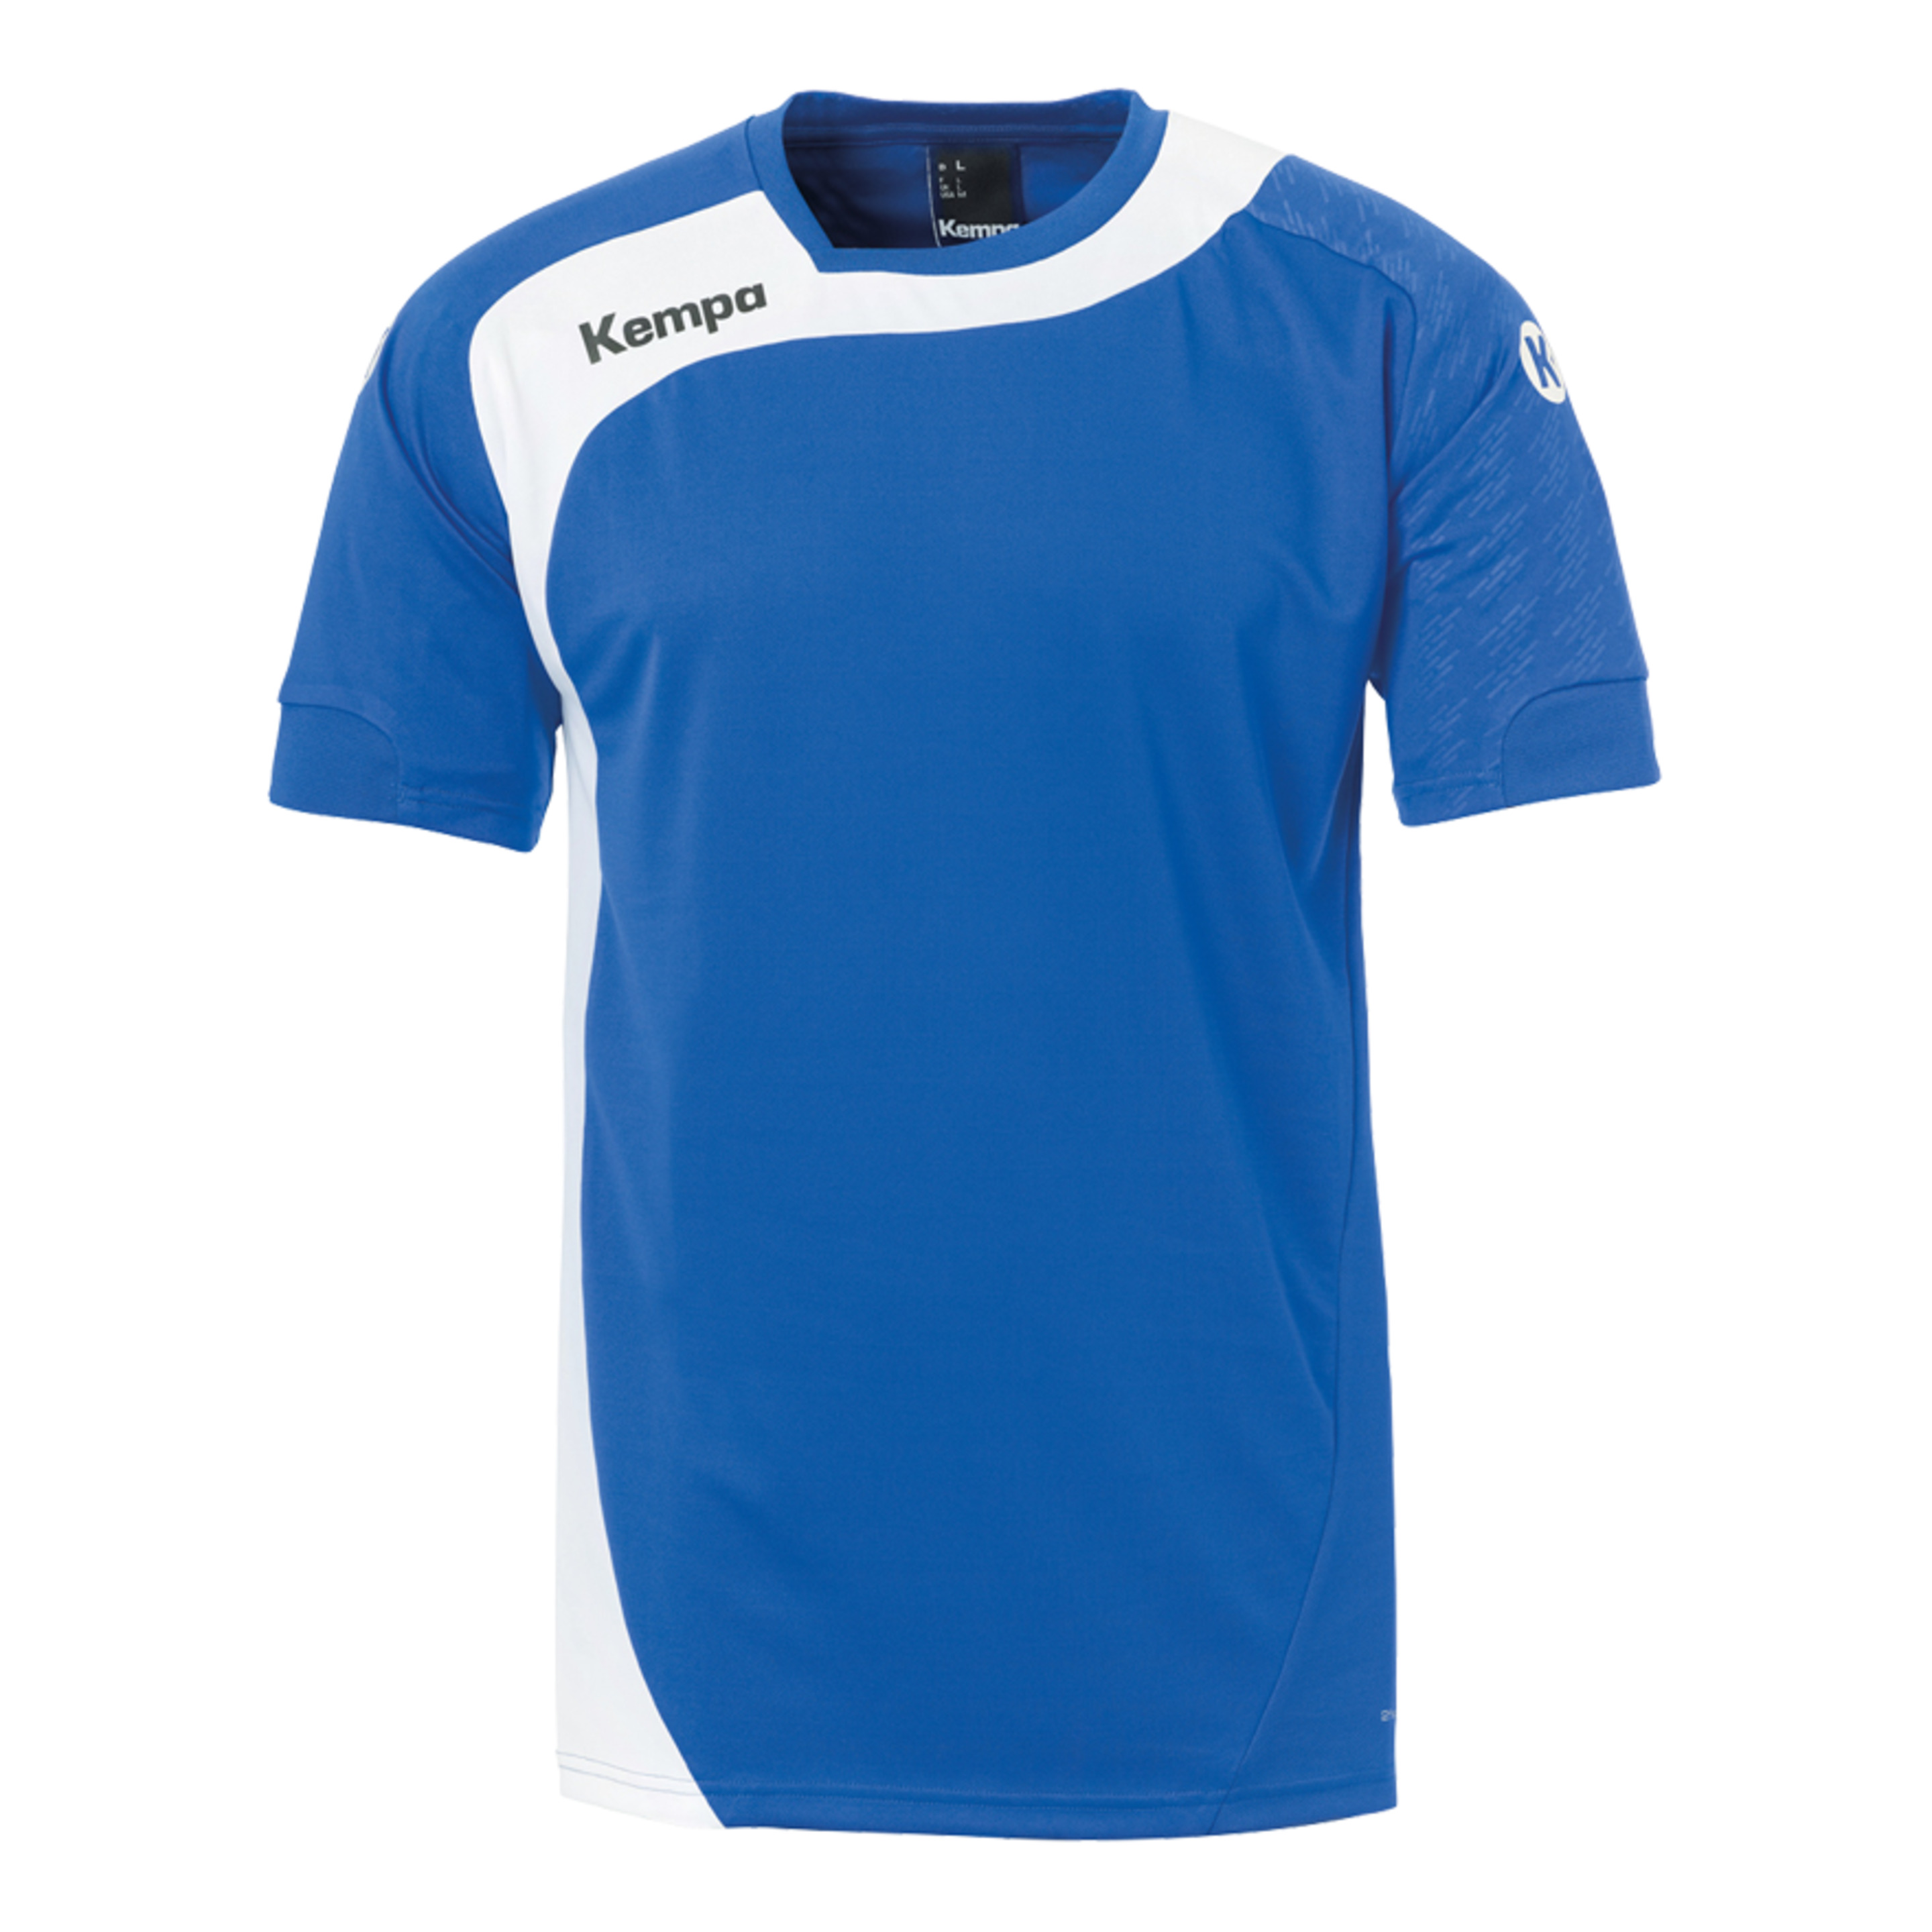 Peak Camiseta Azul Royal/blanco Kempa - azul - 